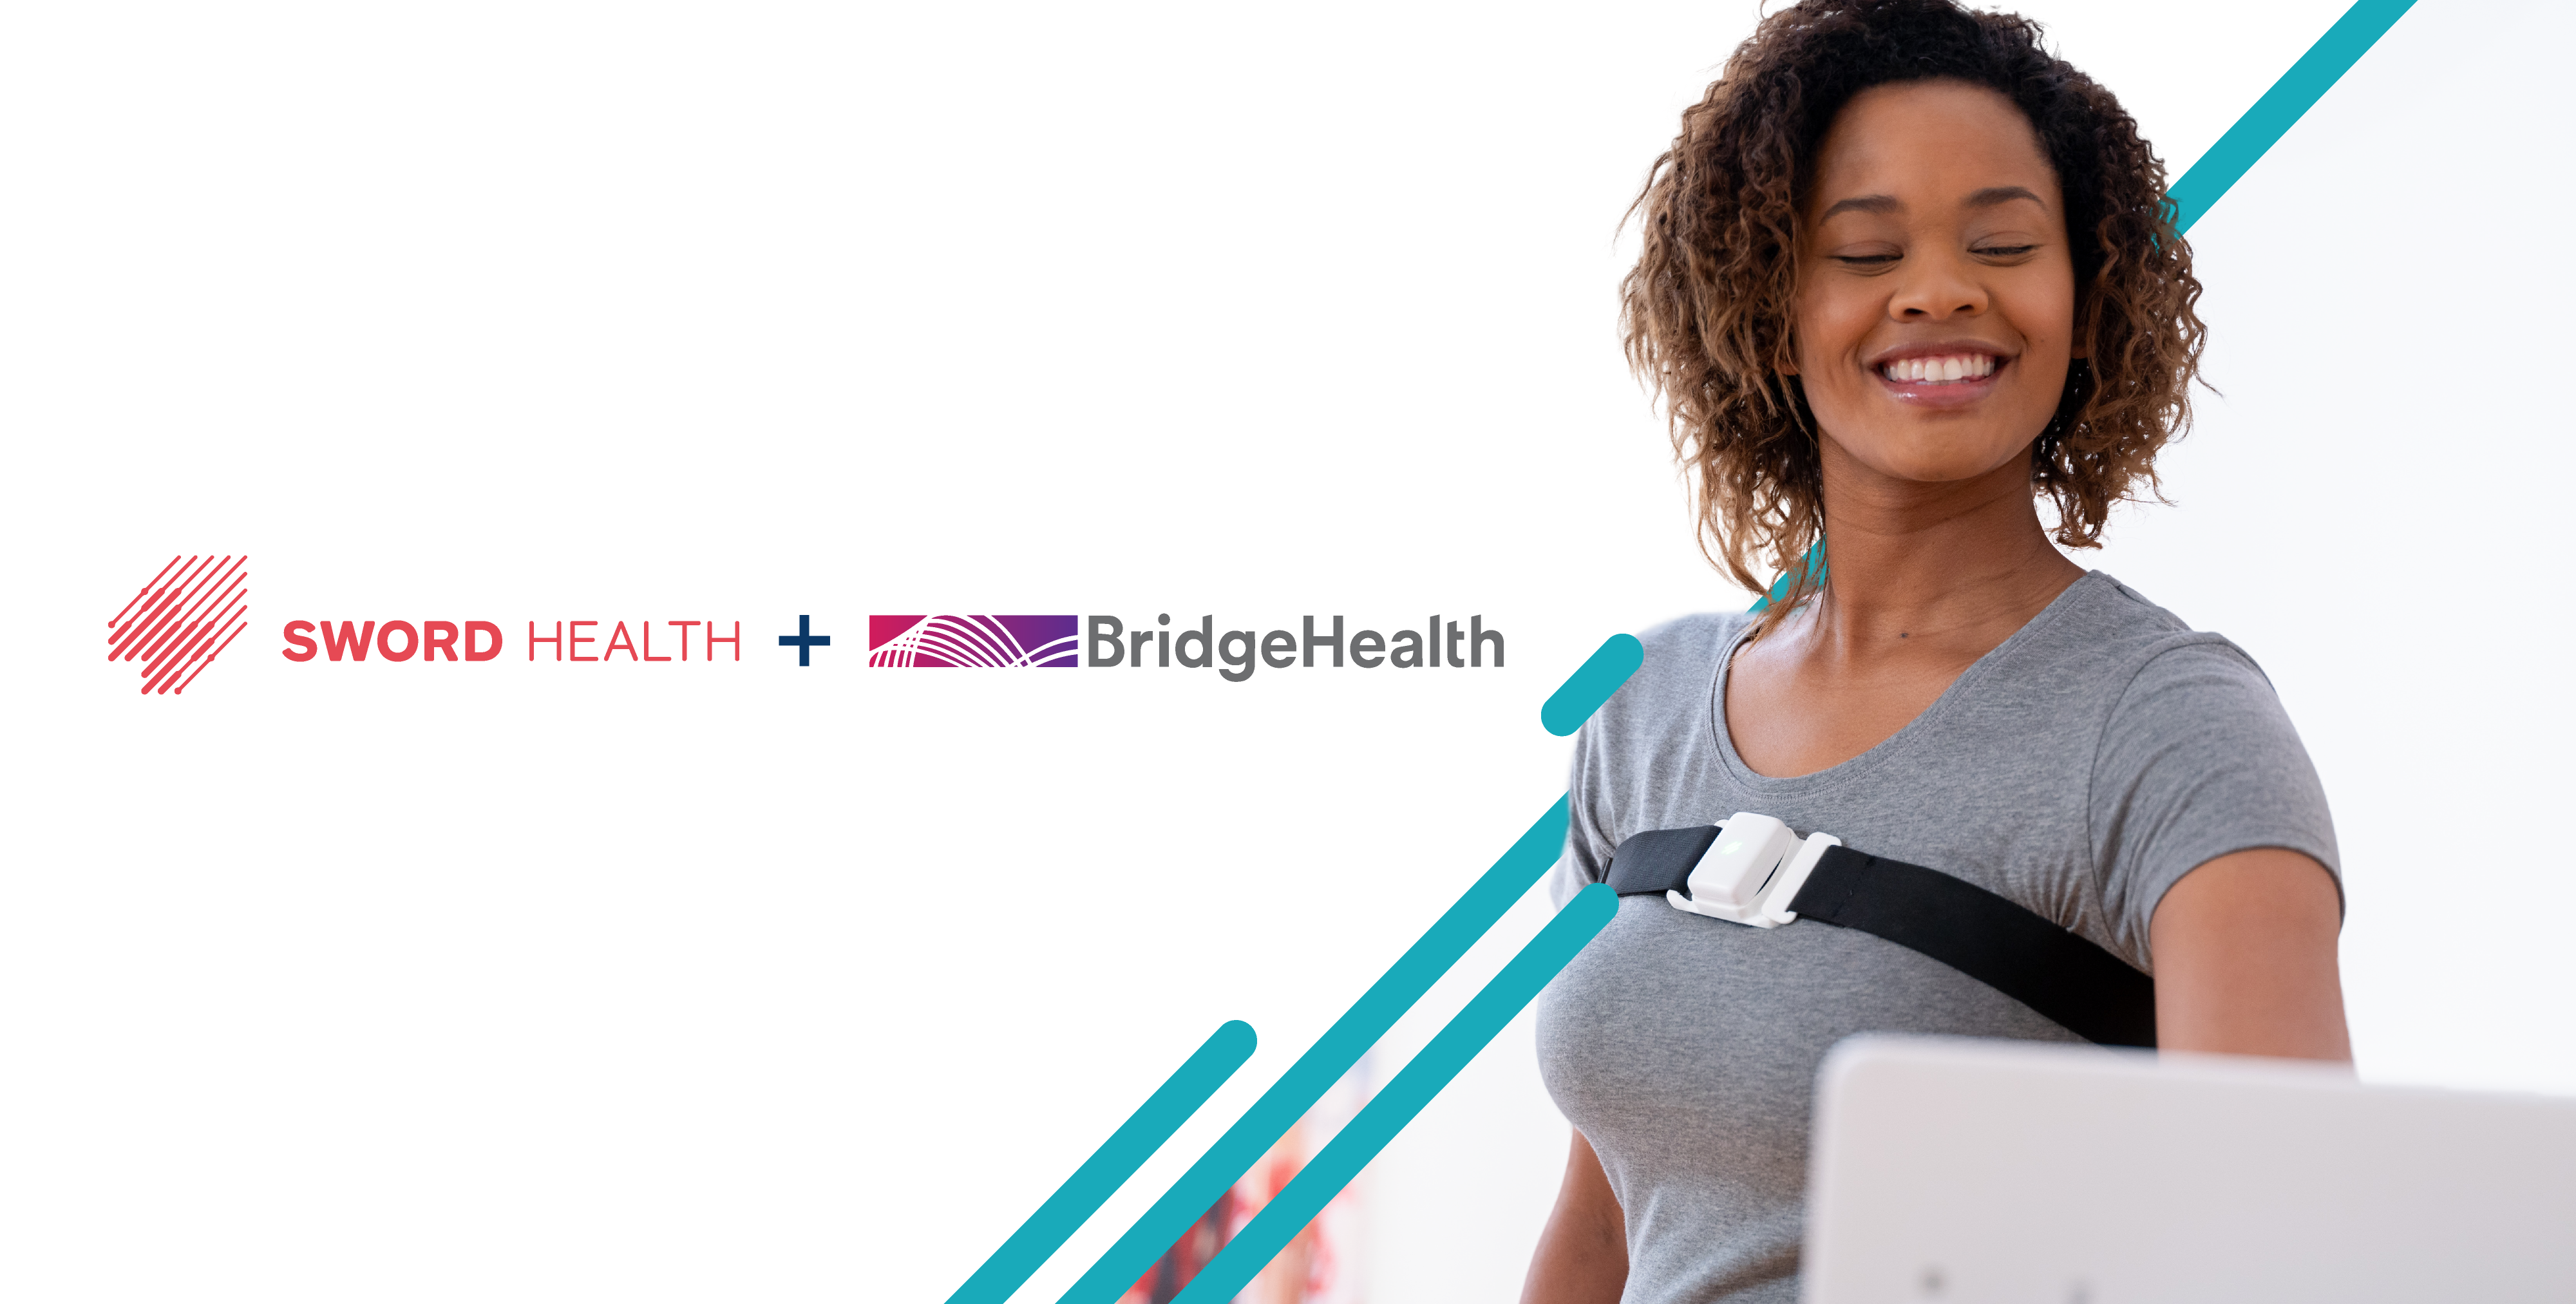 Sword Health and Bridge Health together